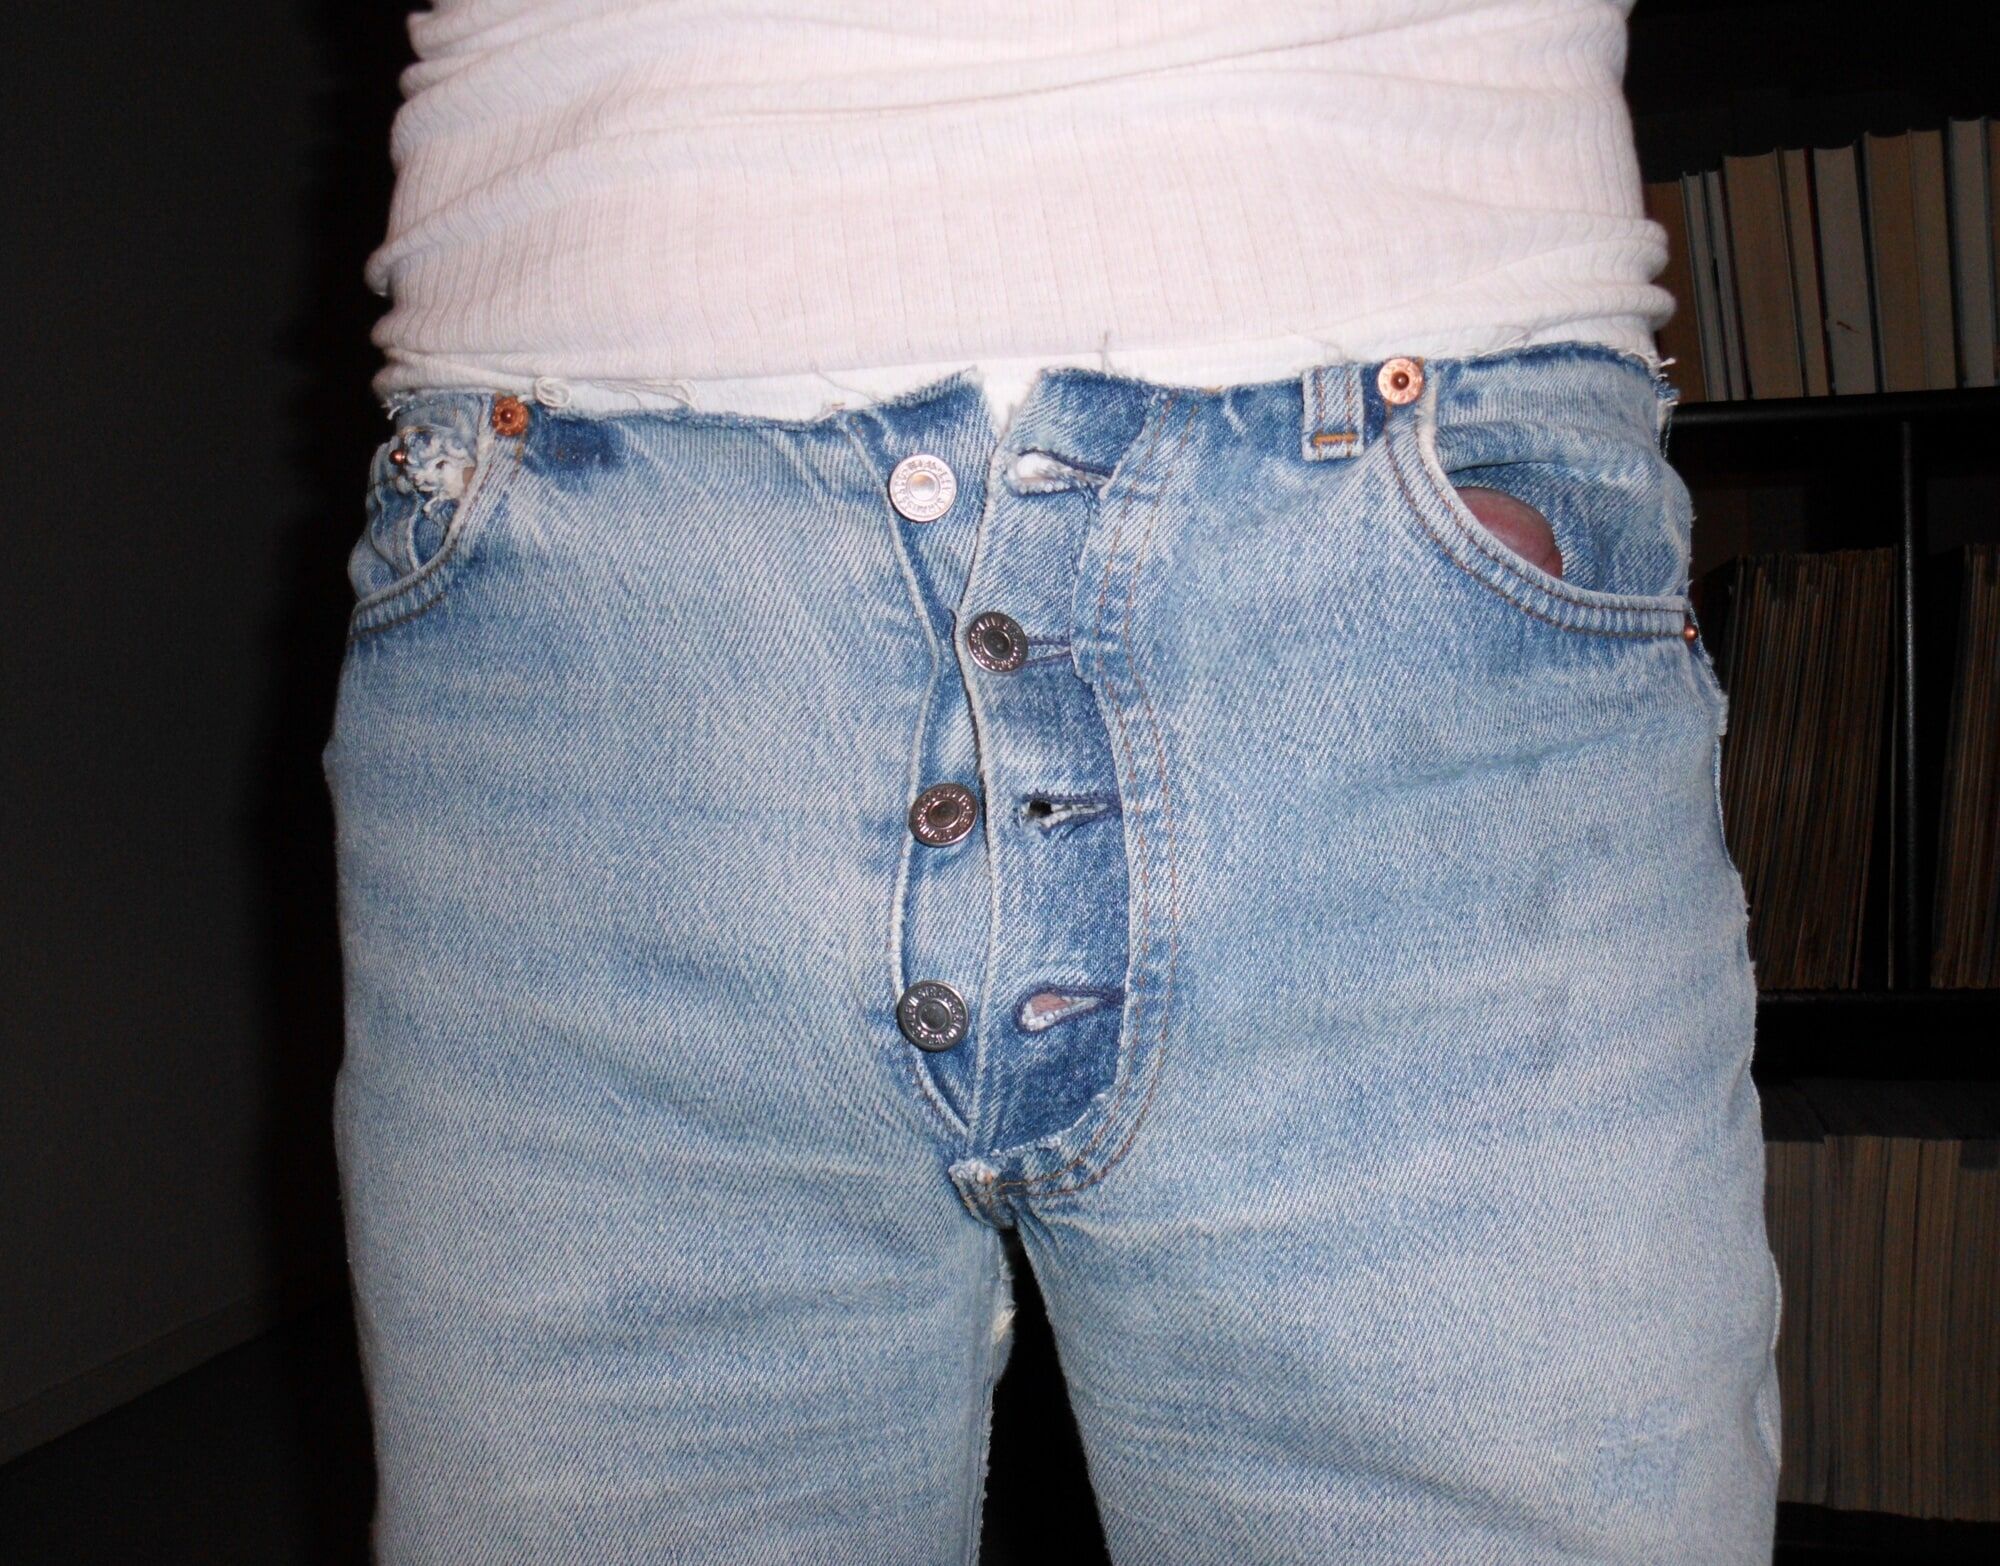 Open Jeans Bulge #6